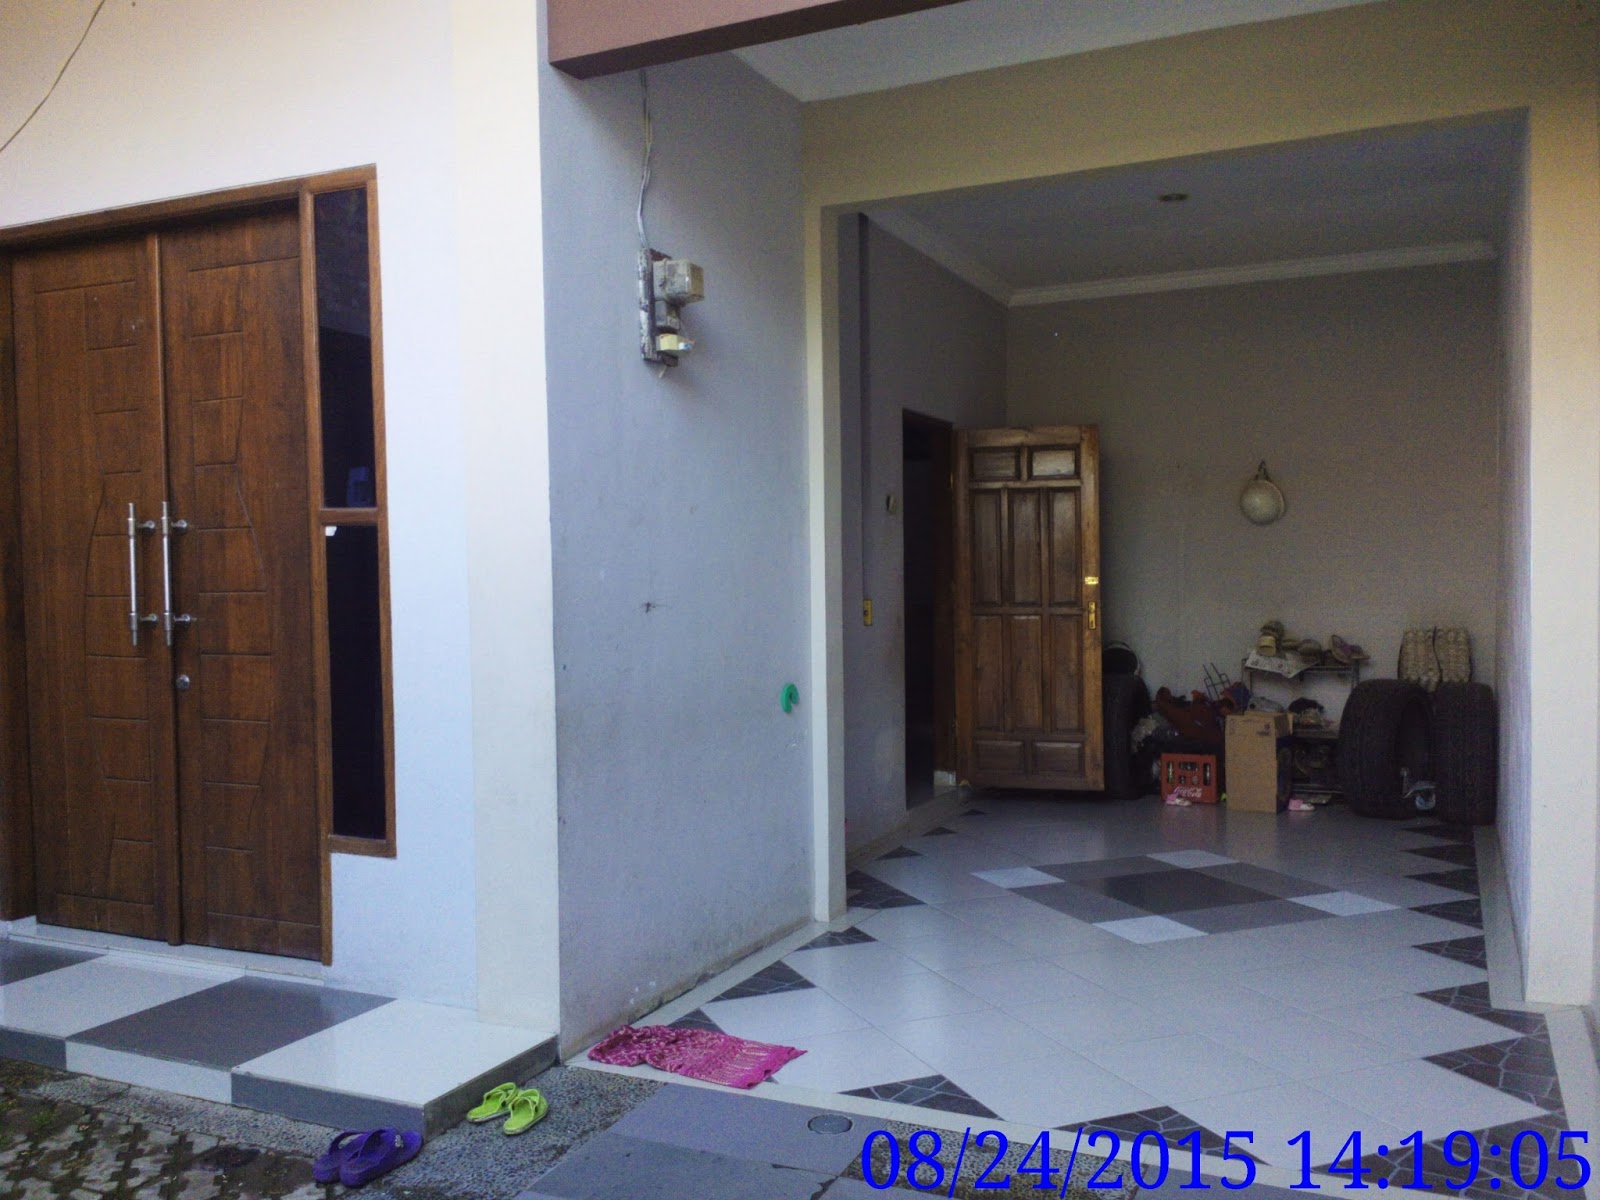  Rumah  Mewah Dijual Murah di  Cimahi  Bandung 850 Juta BU 